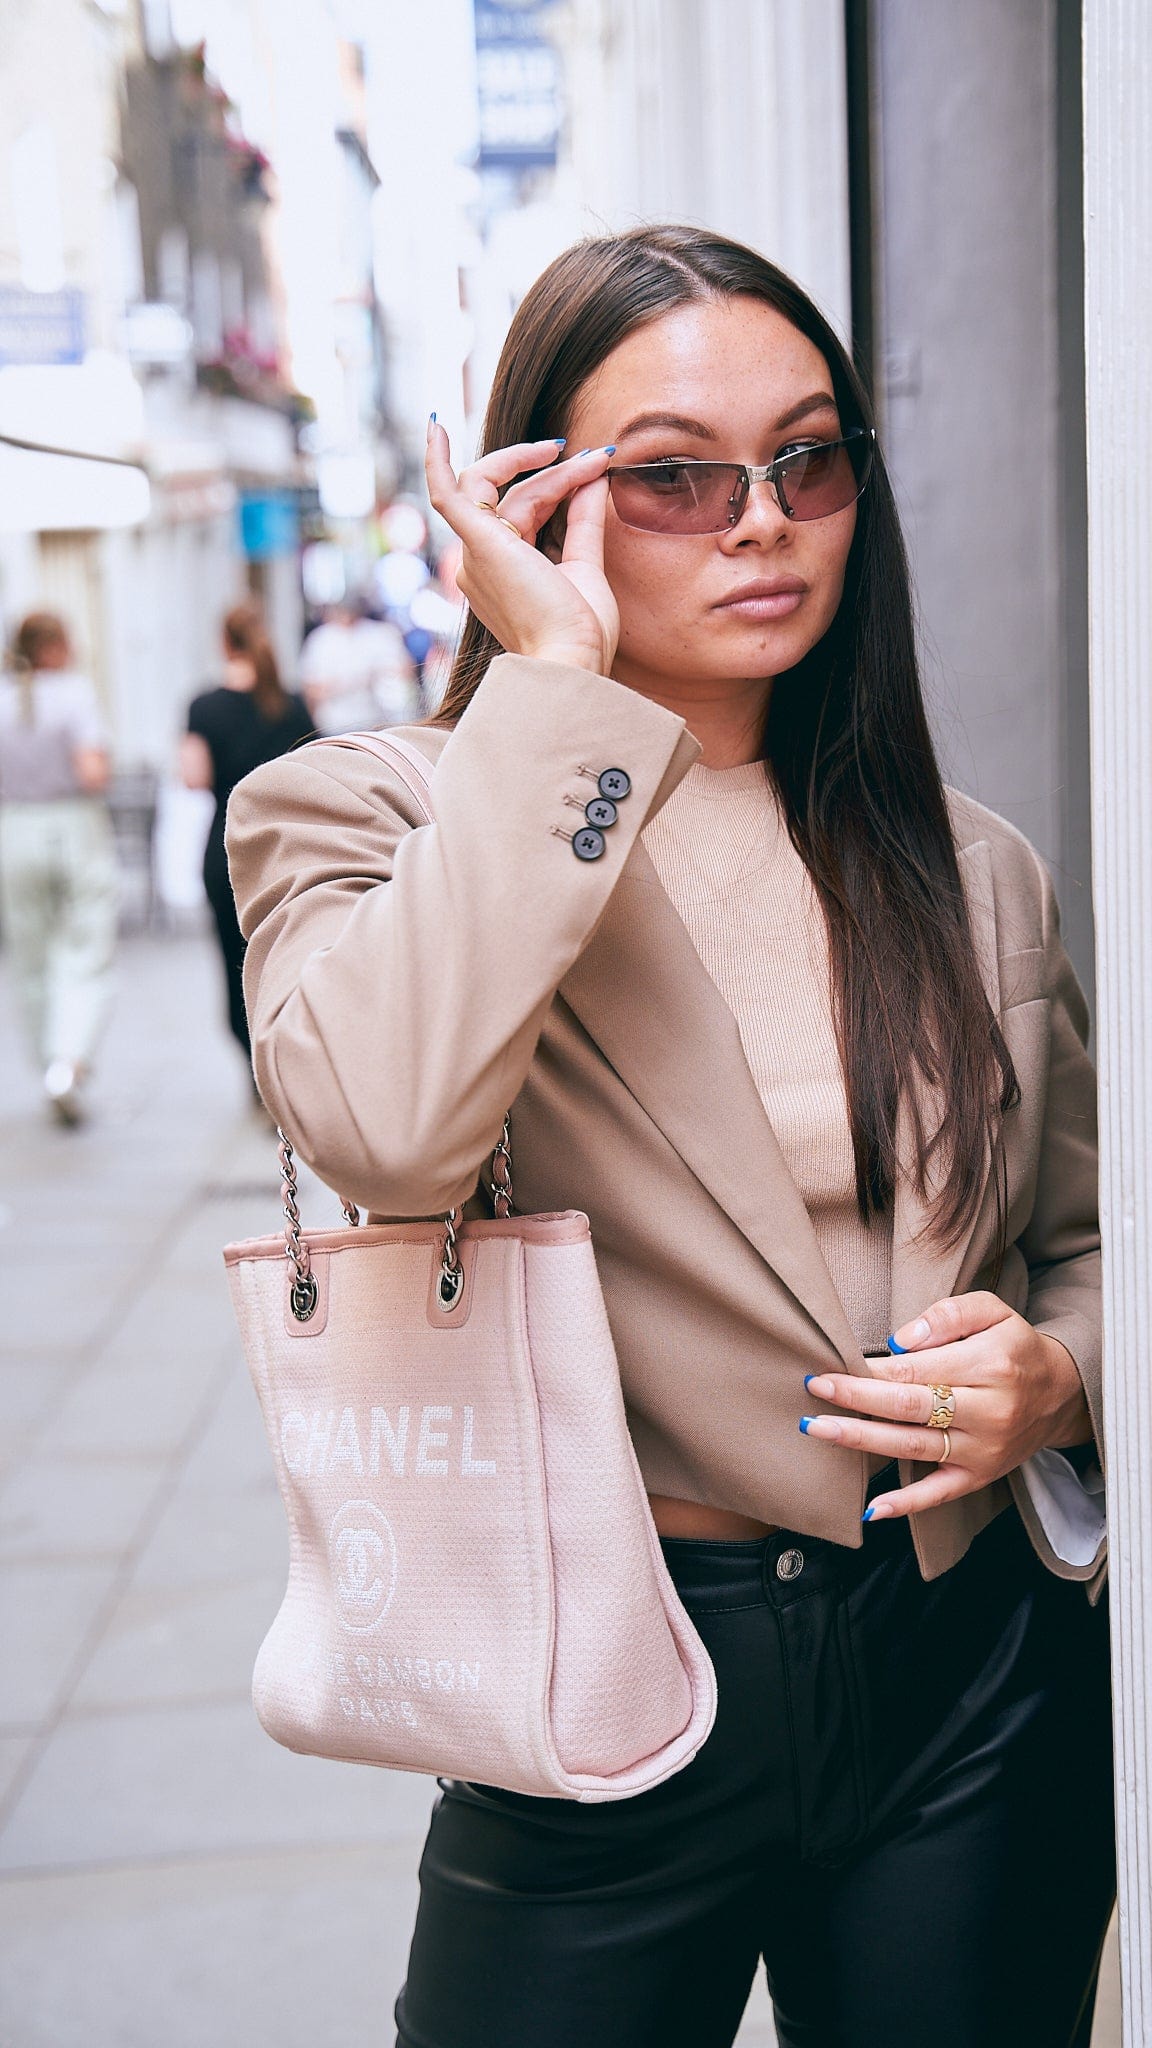 Chanel Chanel Pink Canvas Rue Cambon Tote Bag  - AGL2096